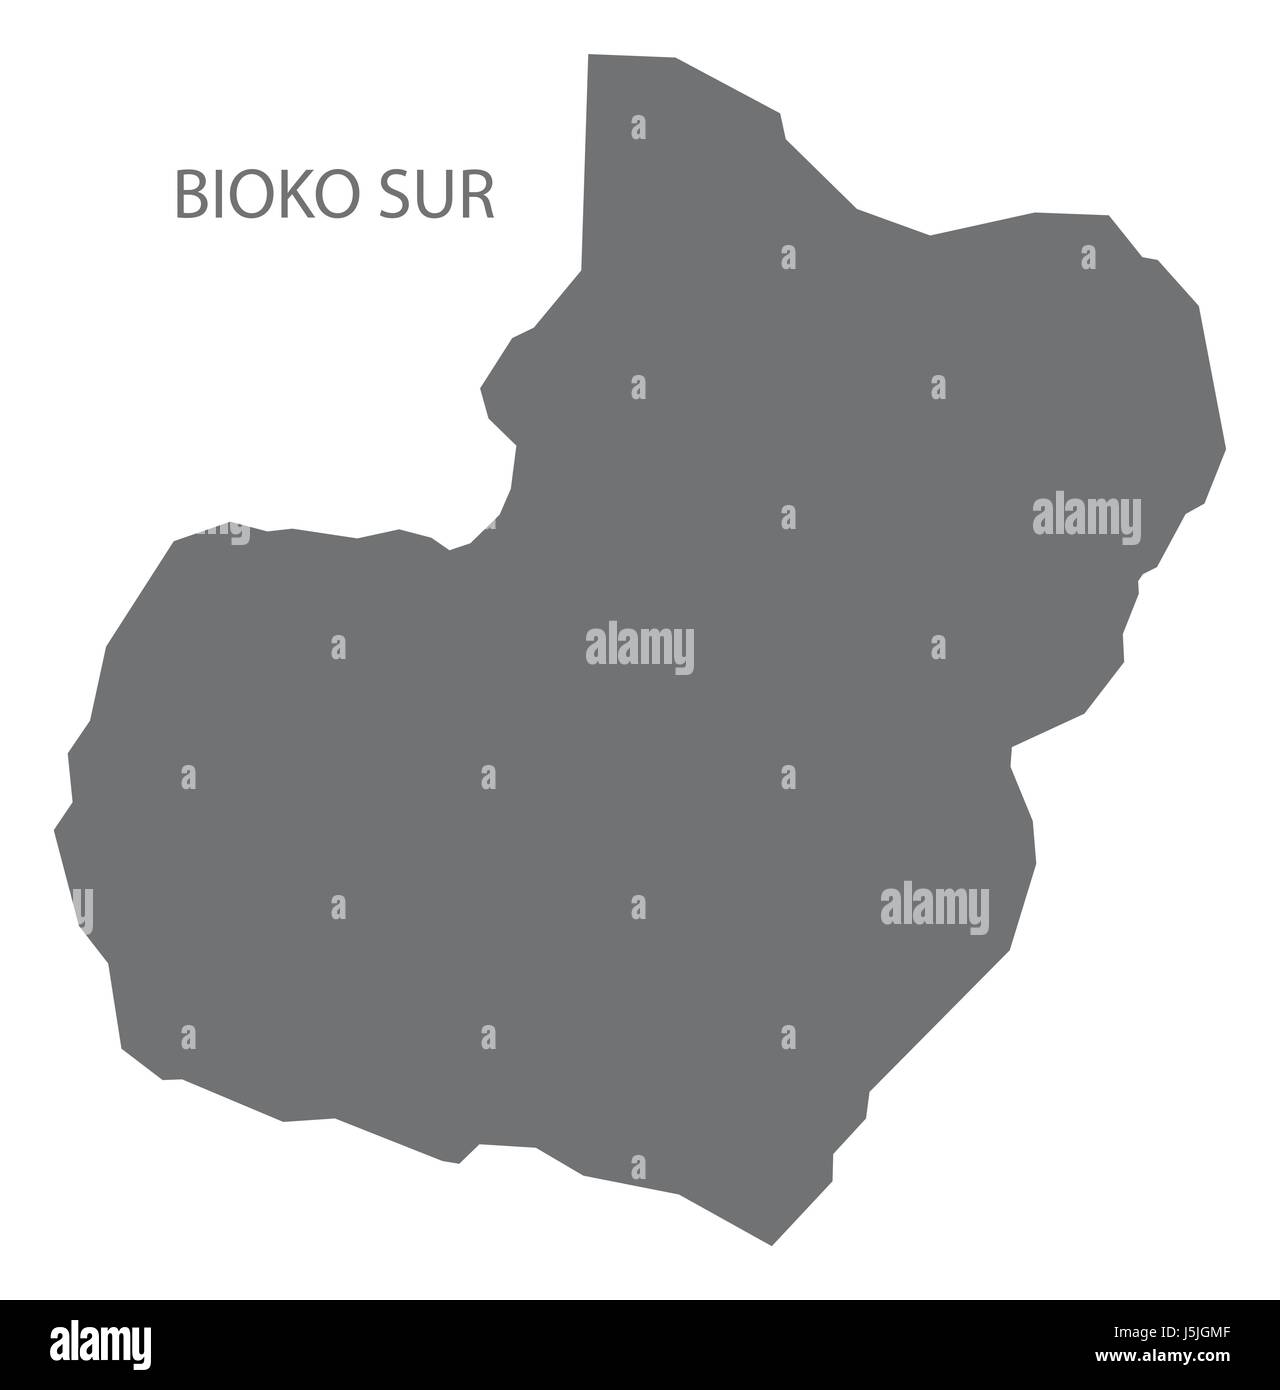 Bioko Sur Equatorial Guinea map grey illustration silhouette Stock Vector